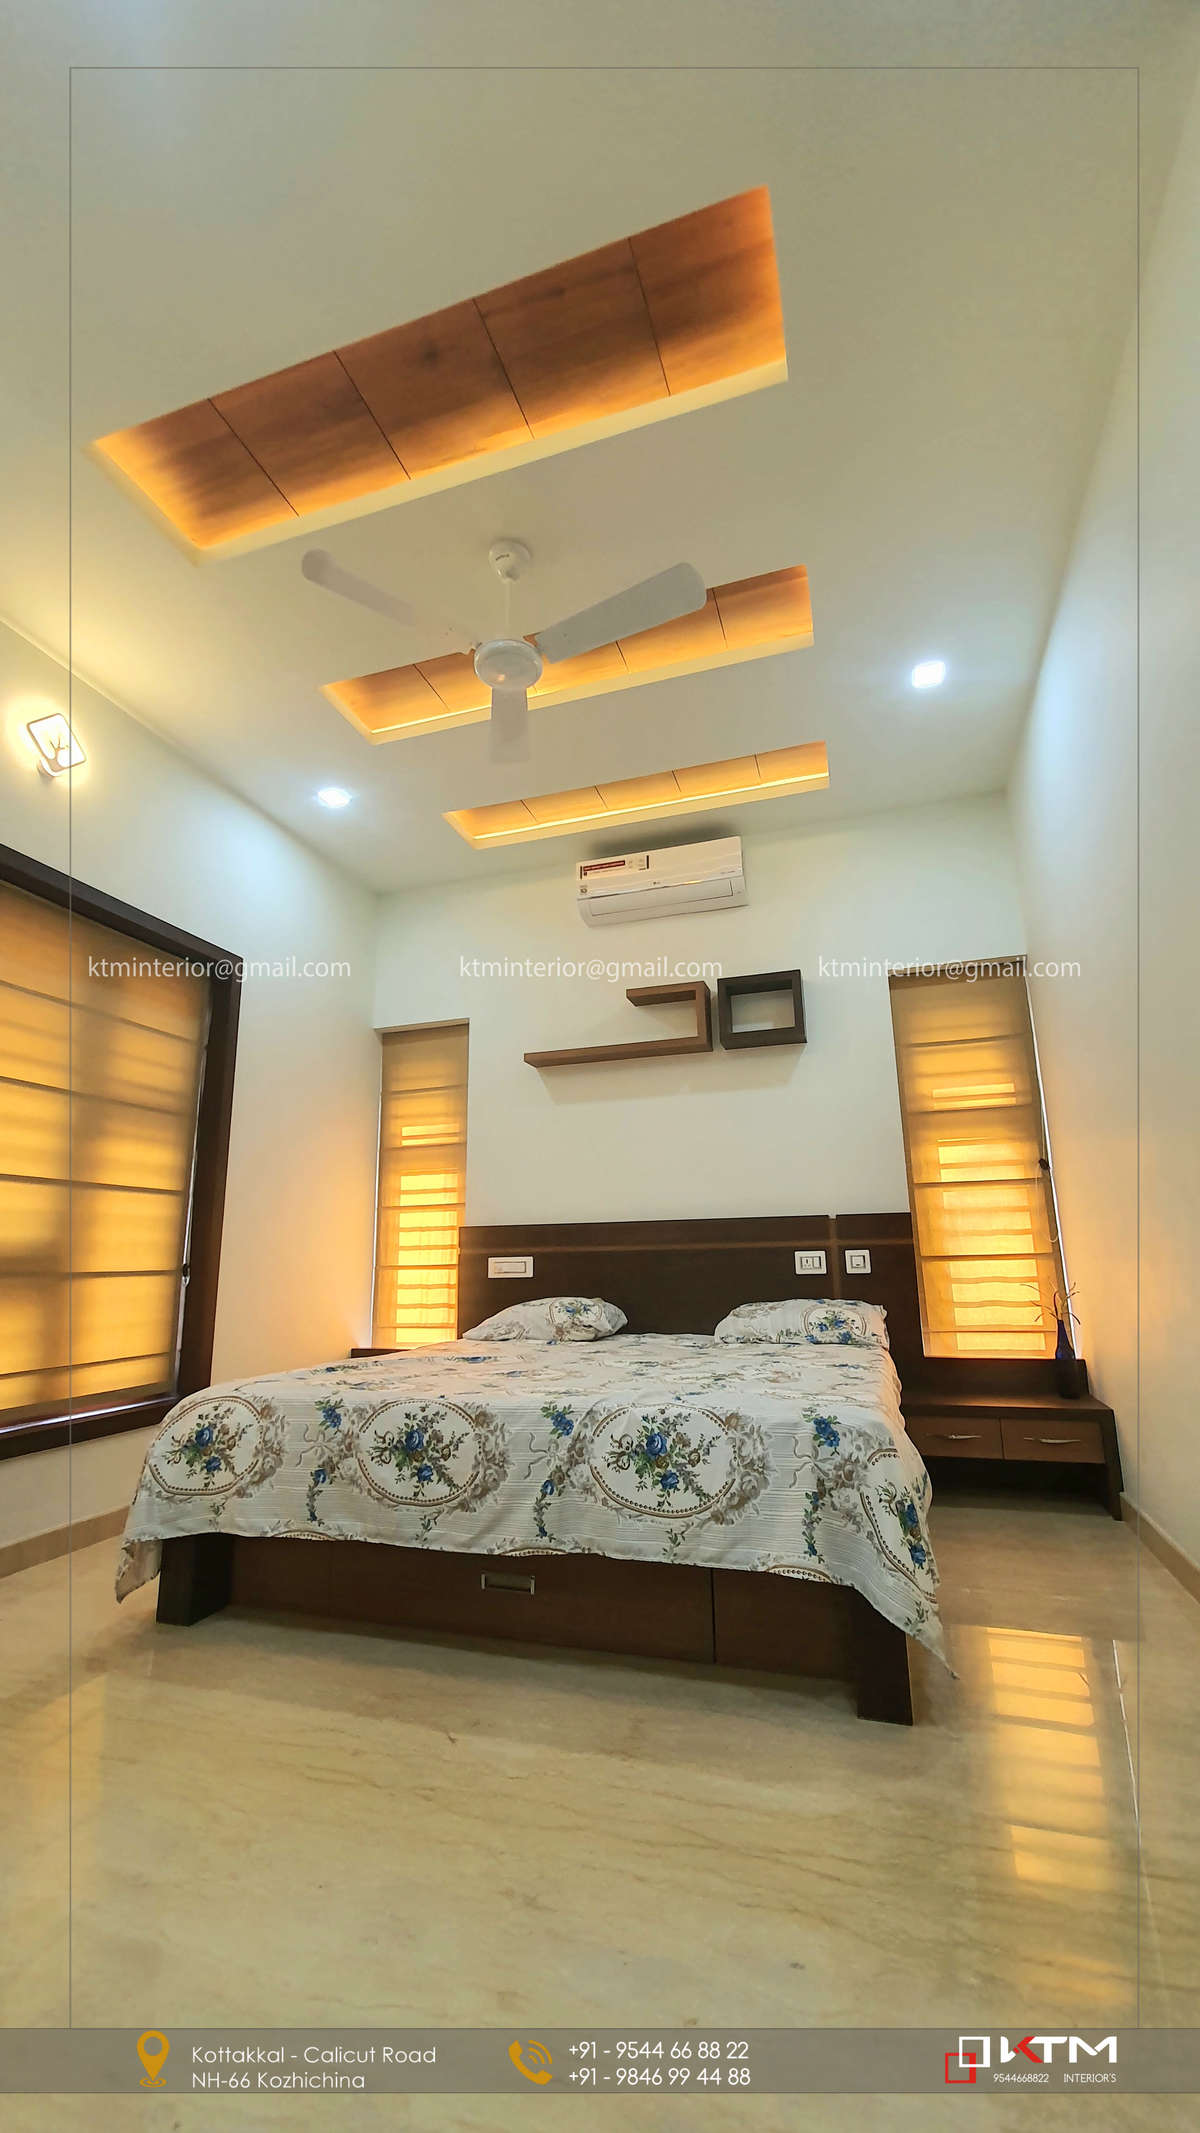 Bedroom, Furniture, Lighting, Ceiling, Storage Designs by Contractor KTM Interiors, Malappuram | Kolo